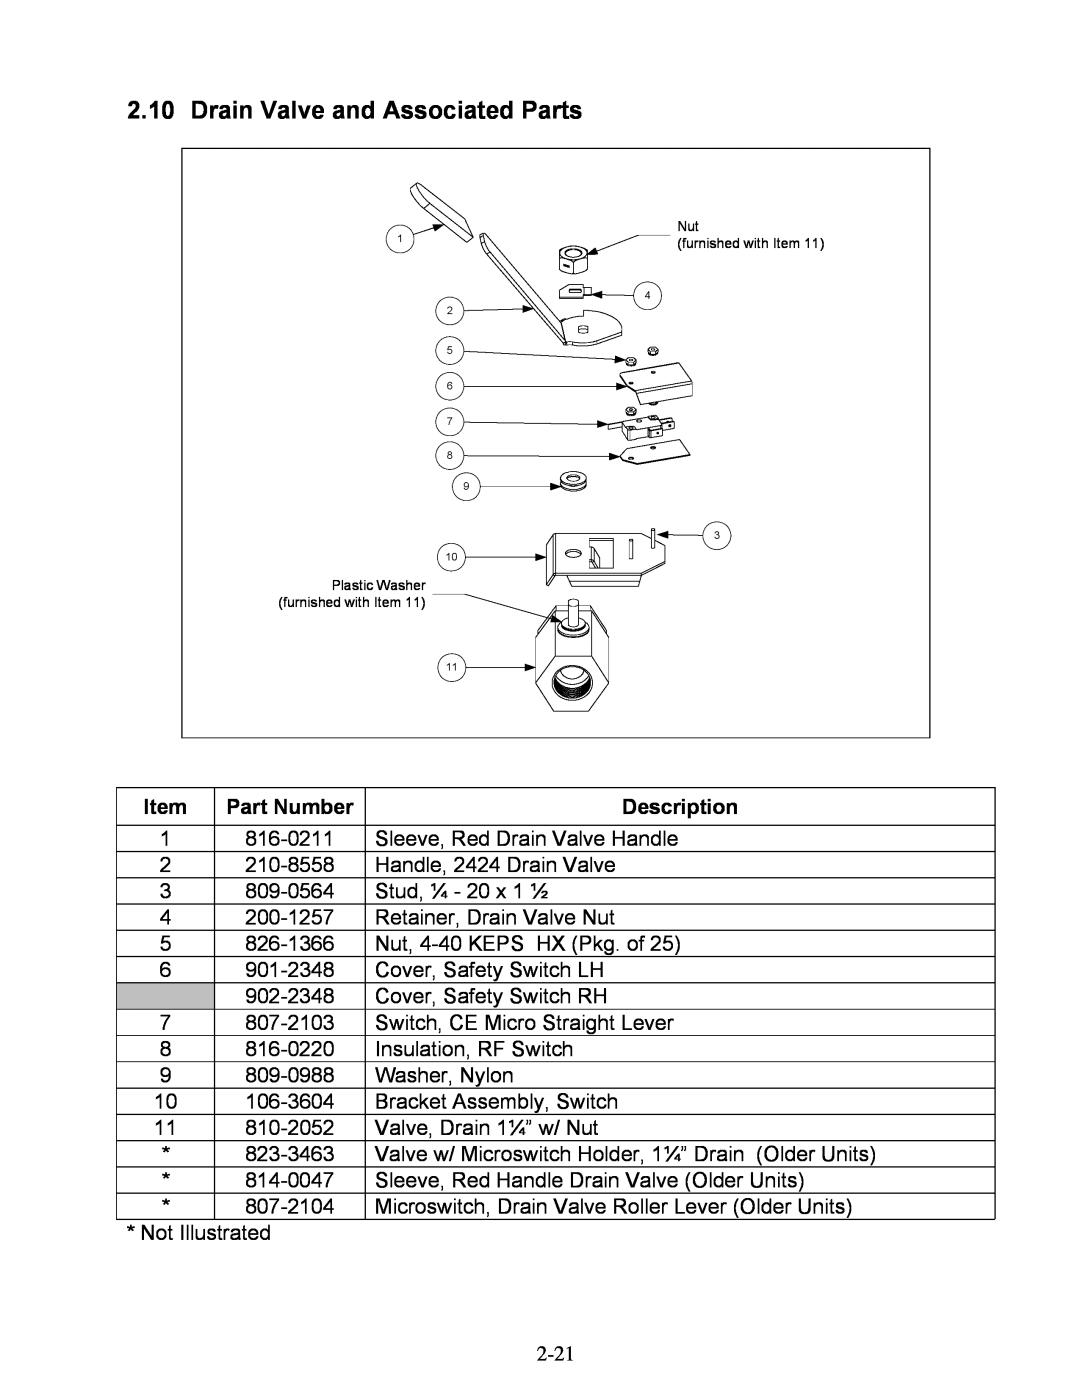 Frymaster 1824E manual Drain Valve and Associated Parts, Part Number, Description 